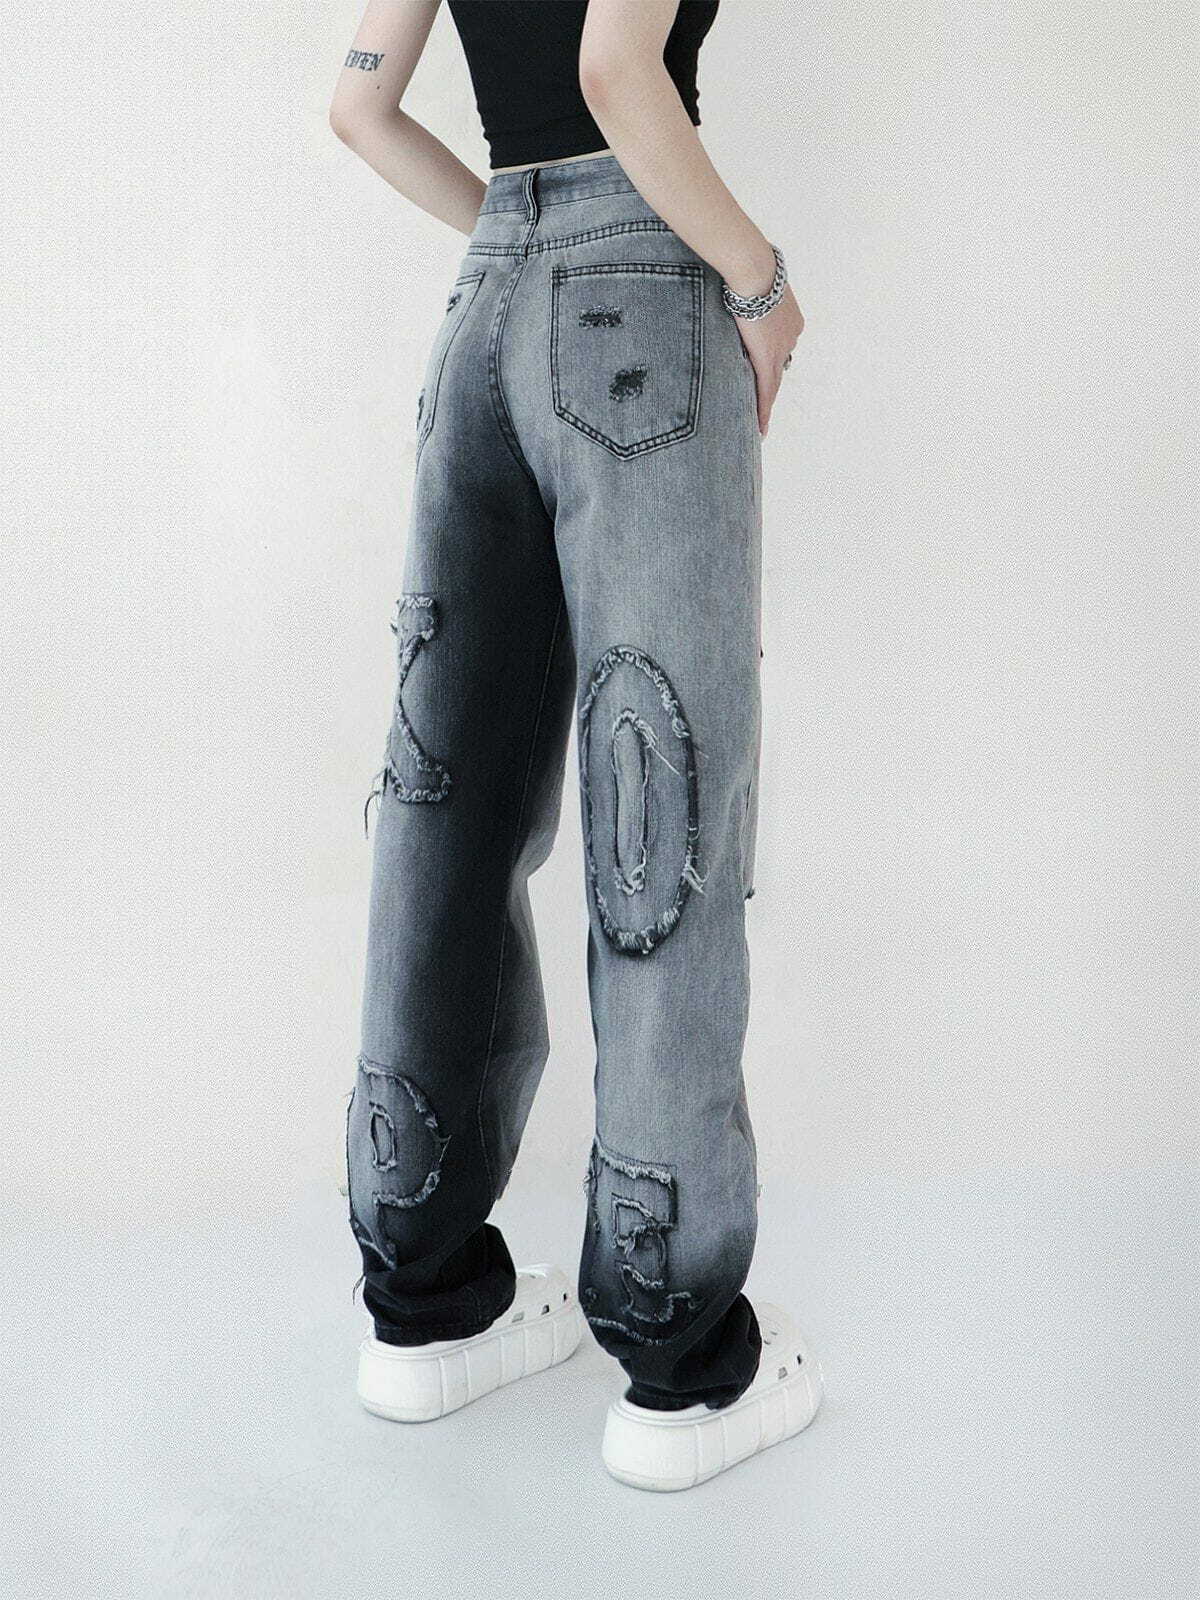 custom letter patch jeans edgy & trendy denim 4396